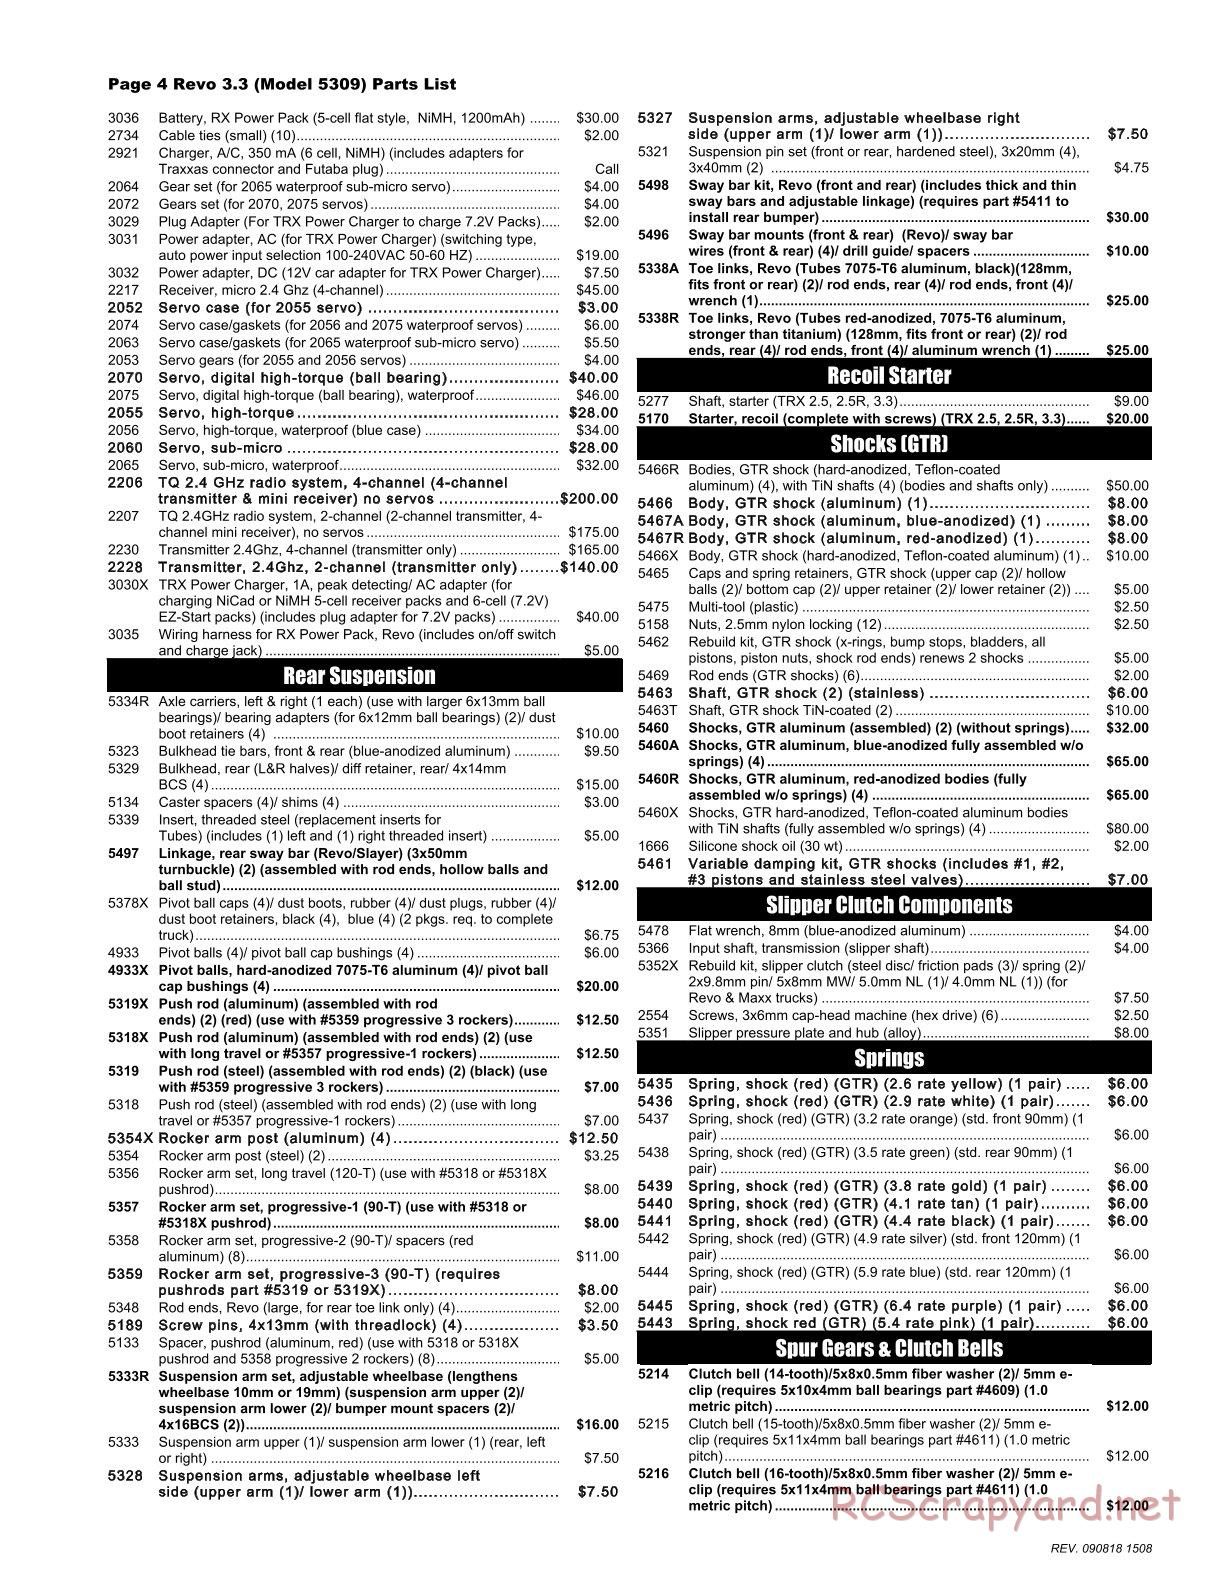 Traxxas - Revo 3.3 - Parts List - Page 4